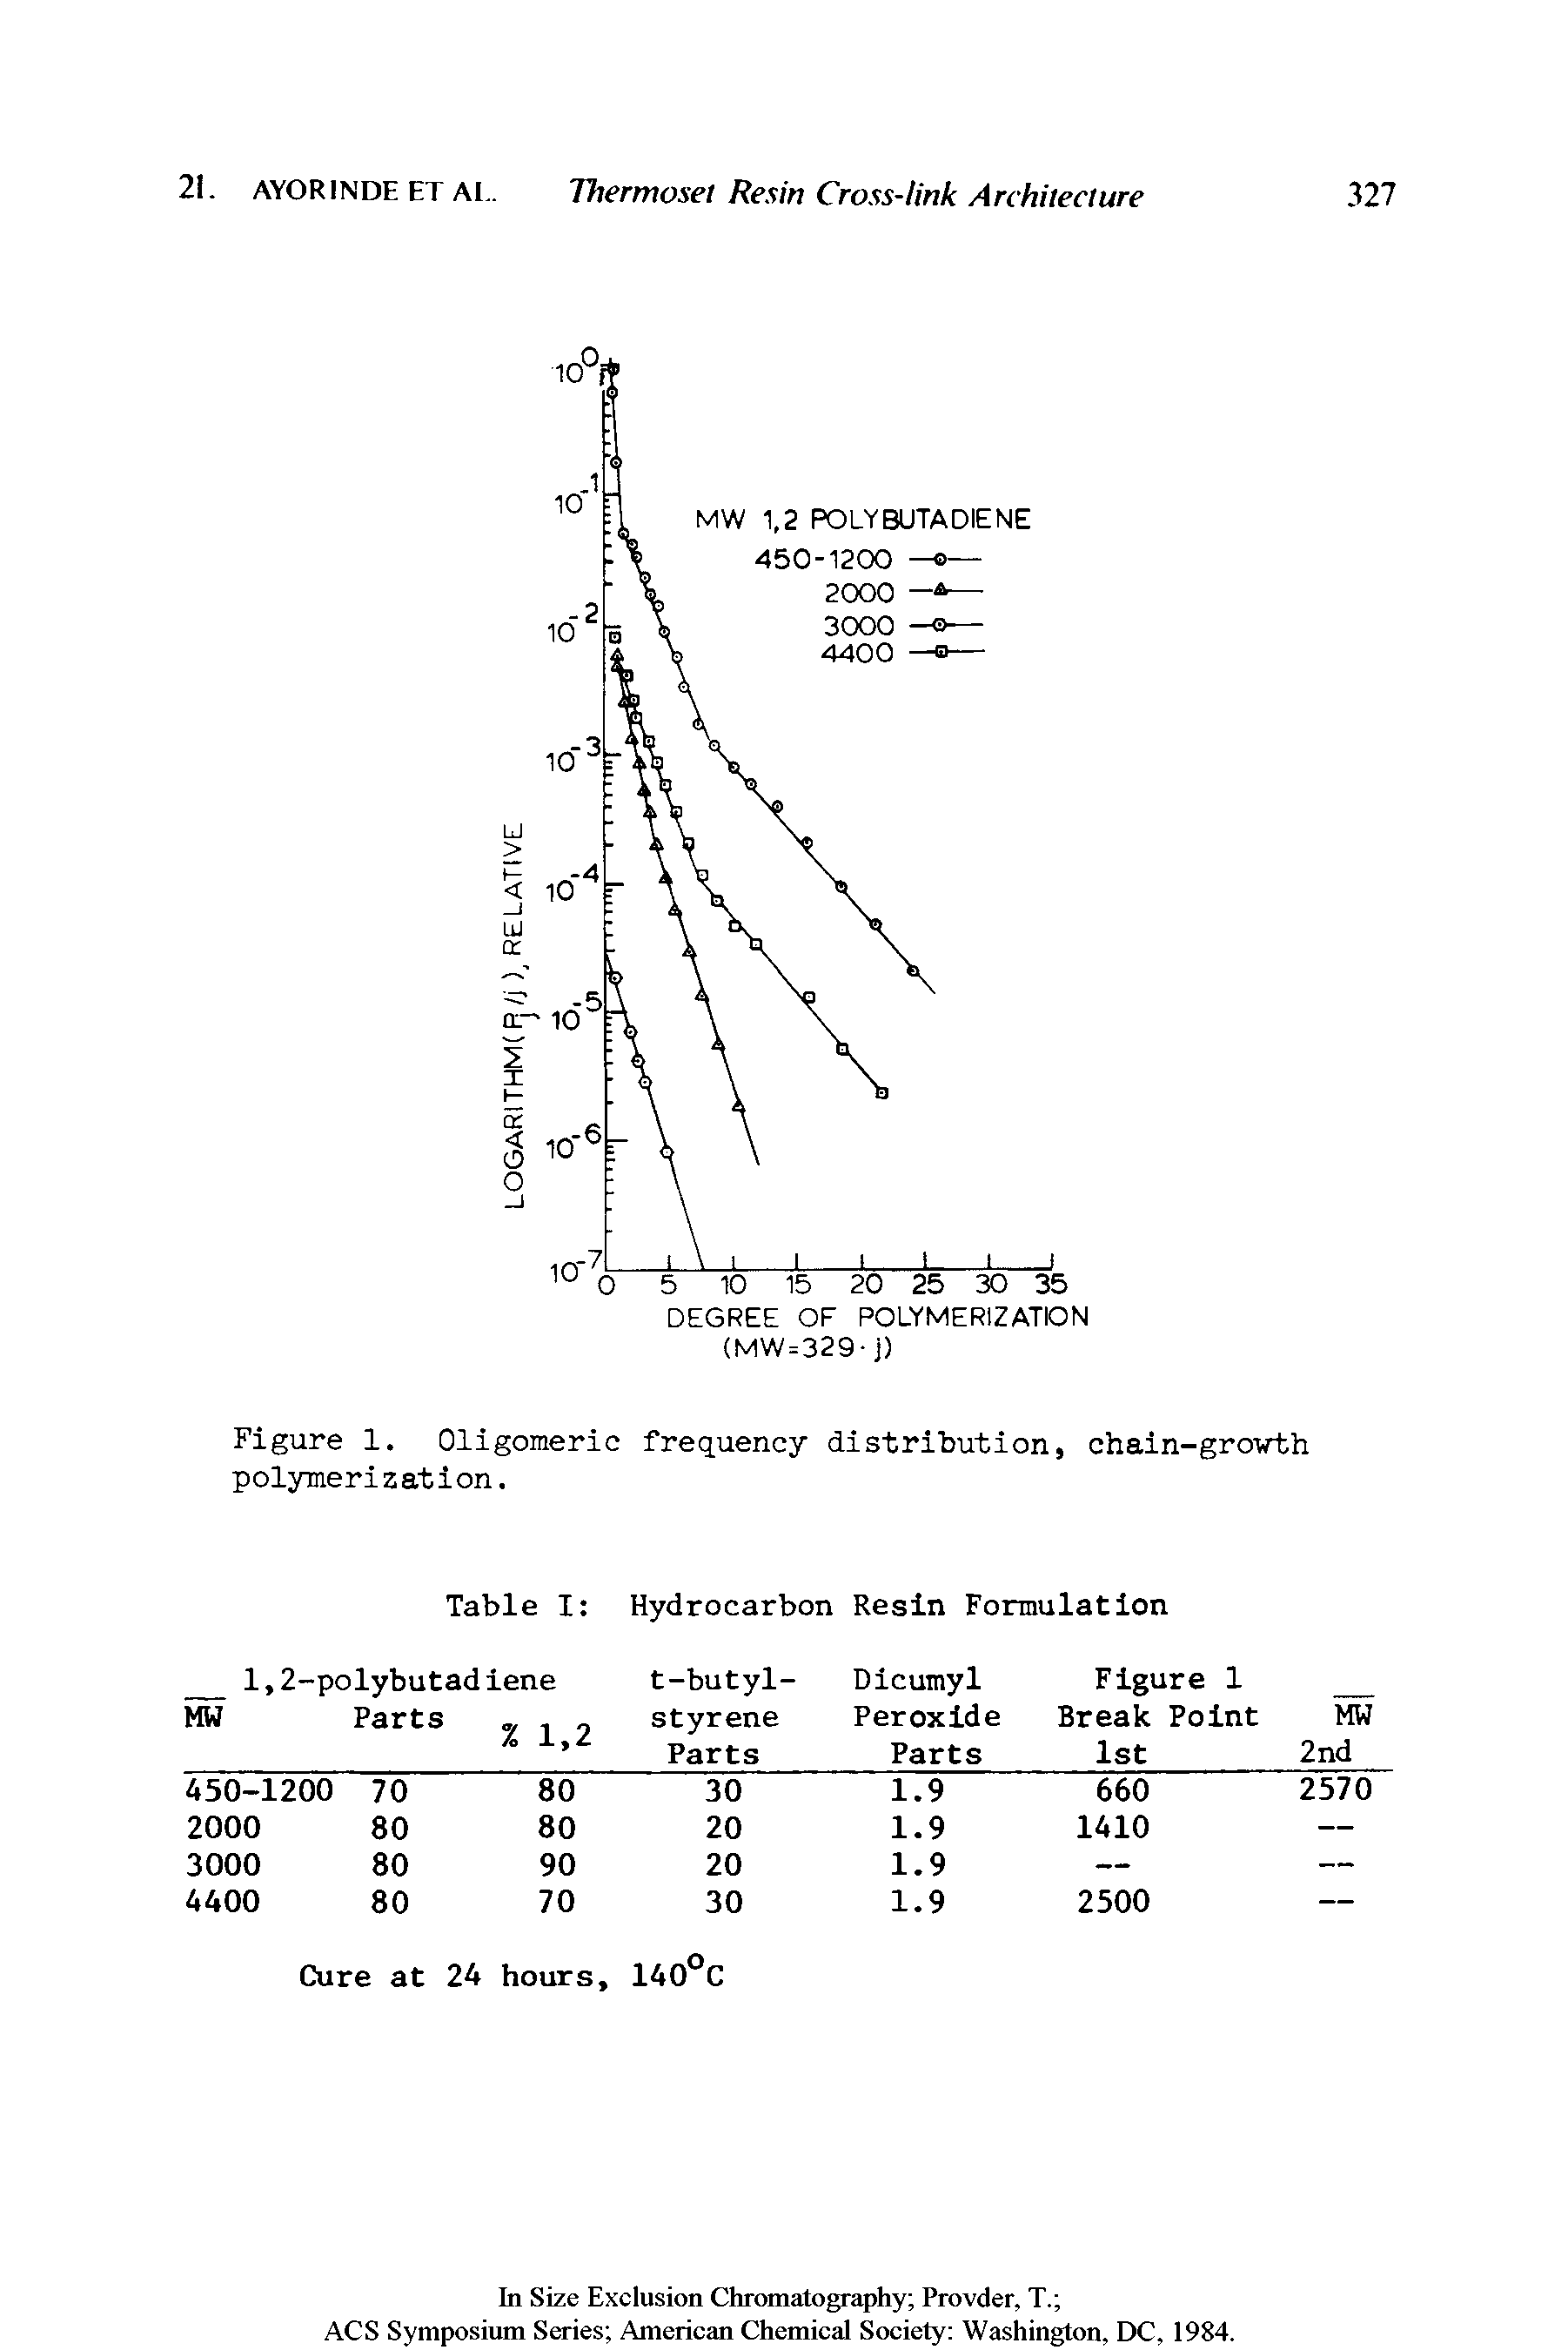 Figure 1. Oligomeric frequency distribution, chain-growth polymerization.